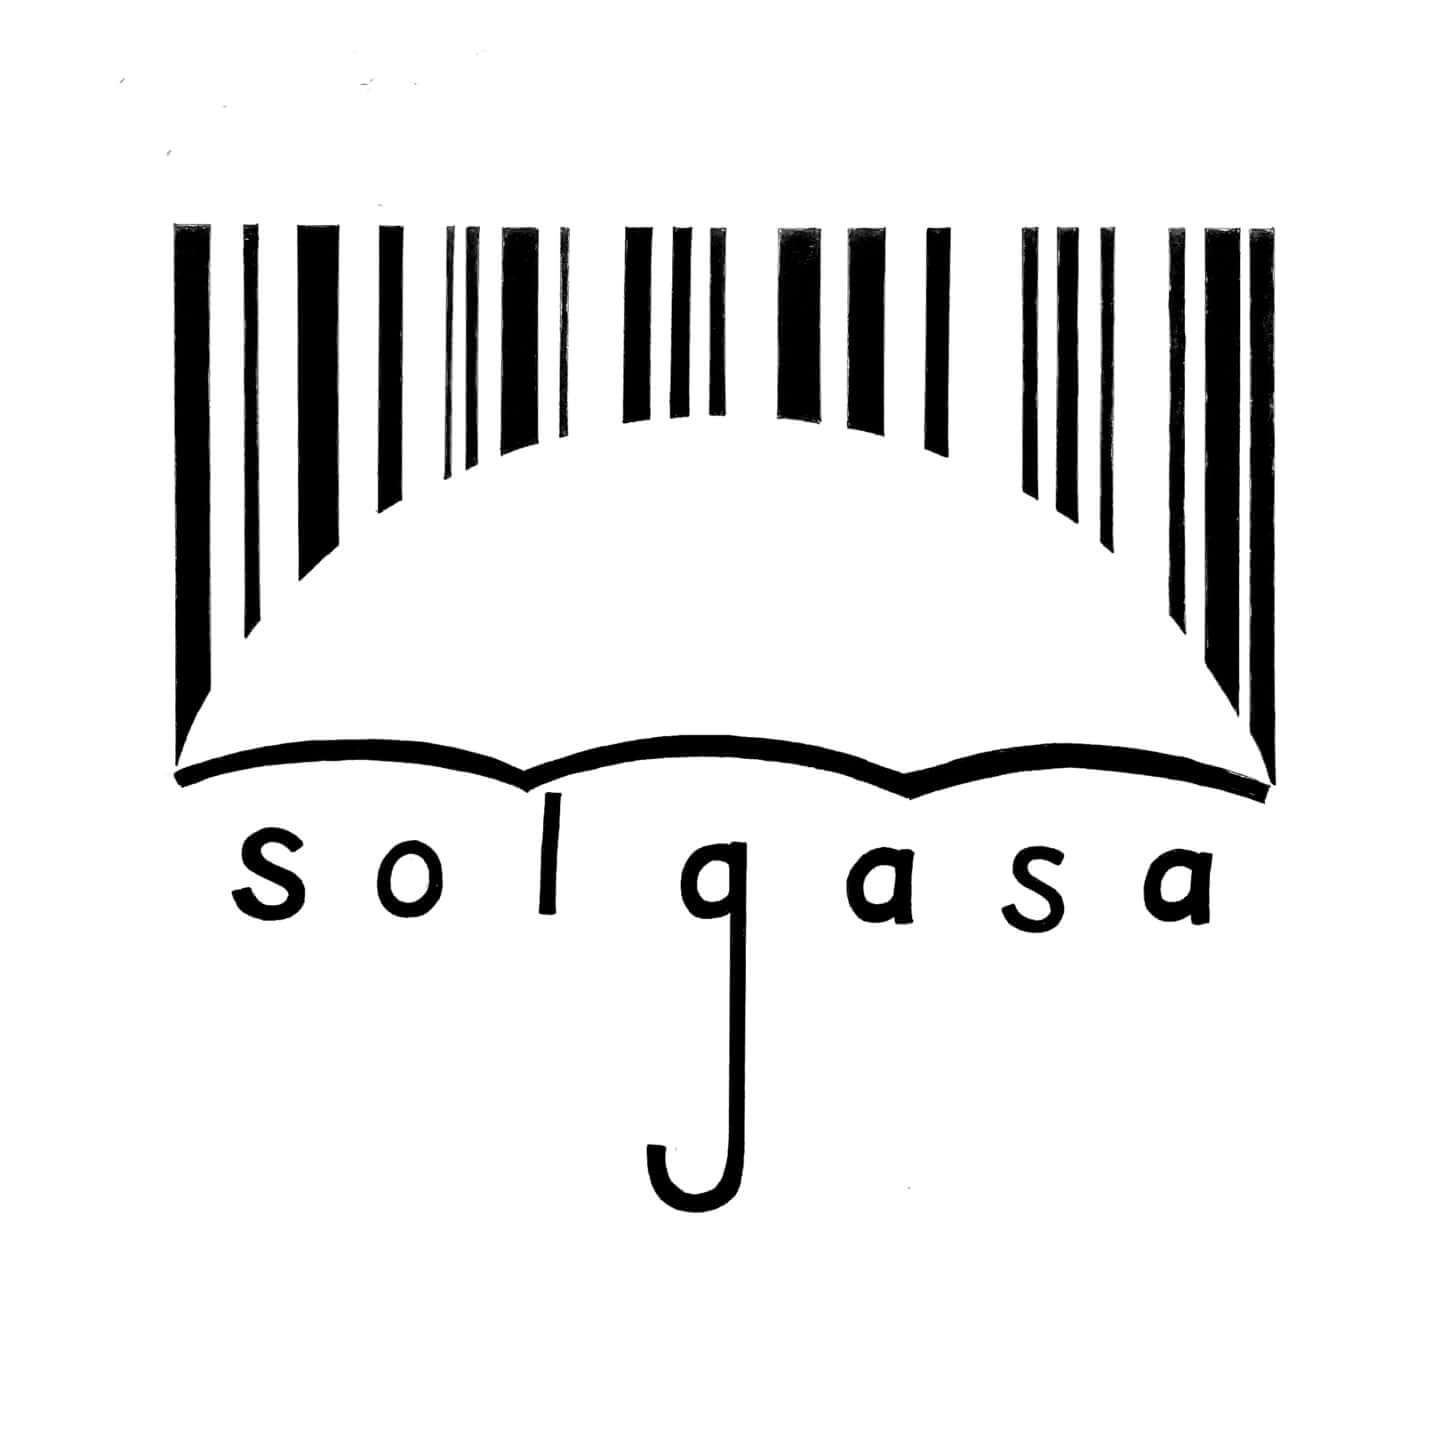 Interview｜世界を“繋げていく”、ユニバーサルな感性をもつ新世代のアート・コレクティヴ〈Solgasa〉が先に見据える音楽活動とは interview0915_solgasa_solgasa-1440x1440